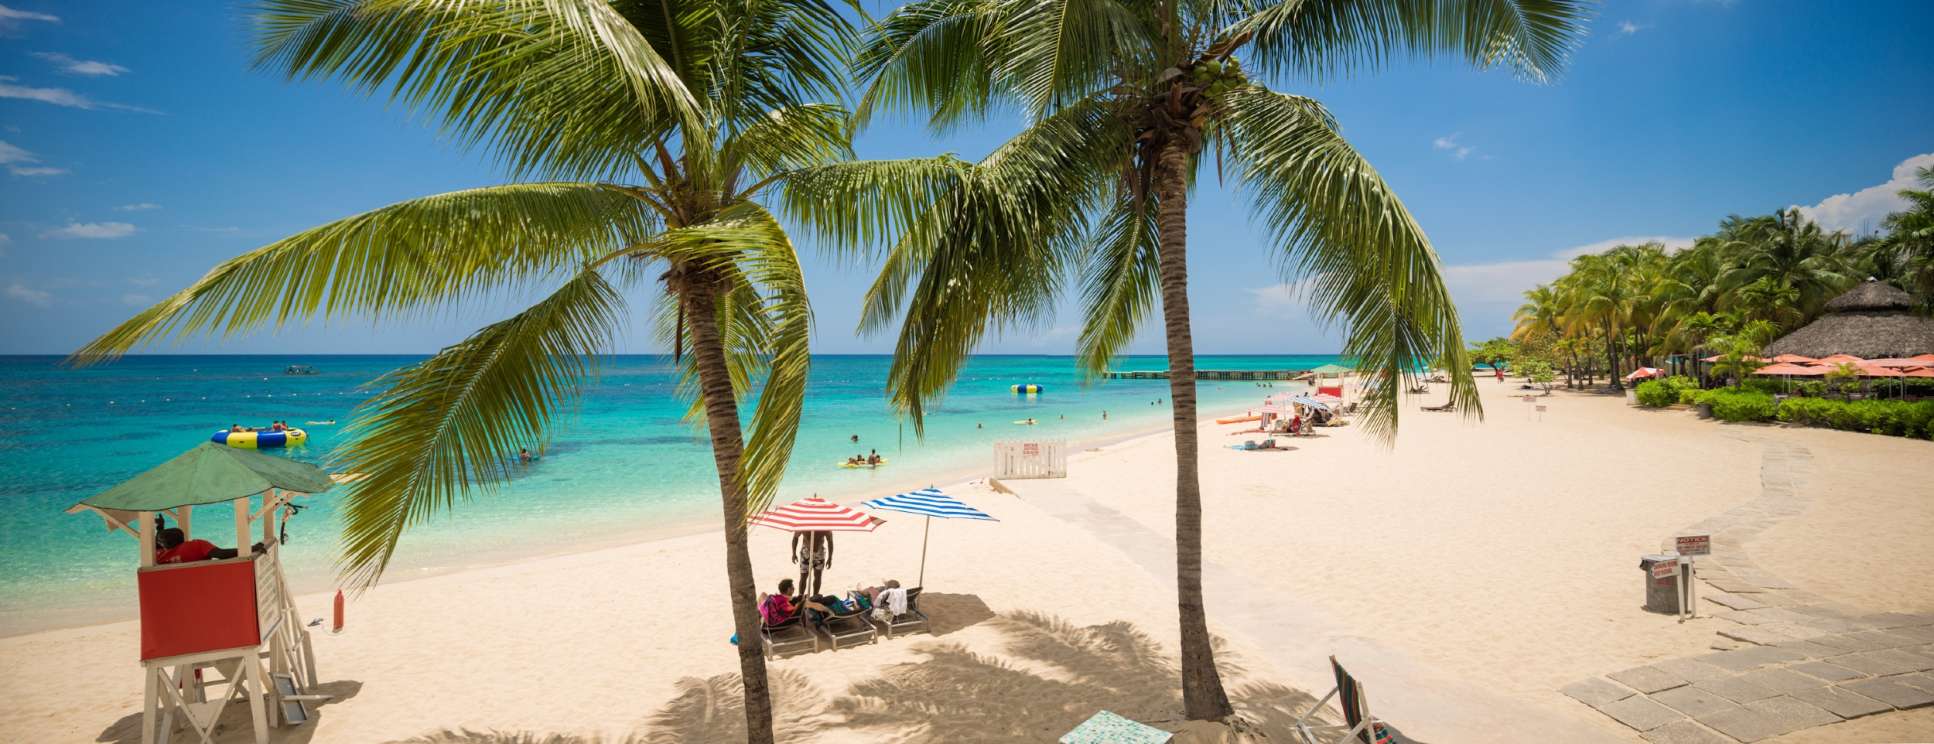 Deja AllInclusive Resort, Jamaica Blue Bay Travel